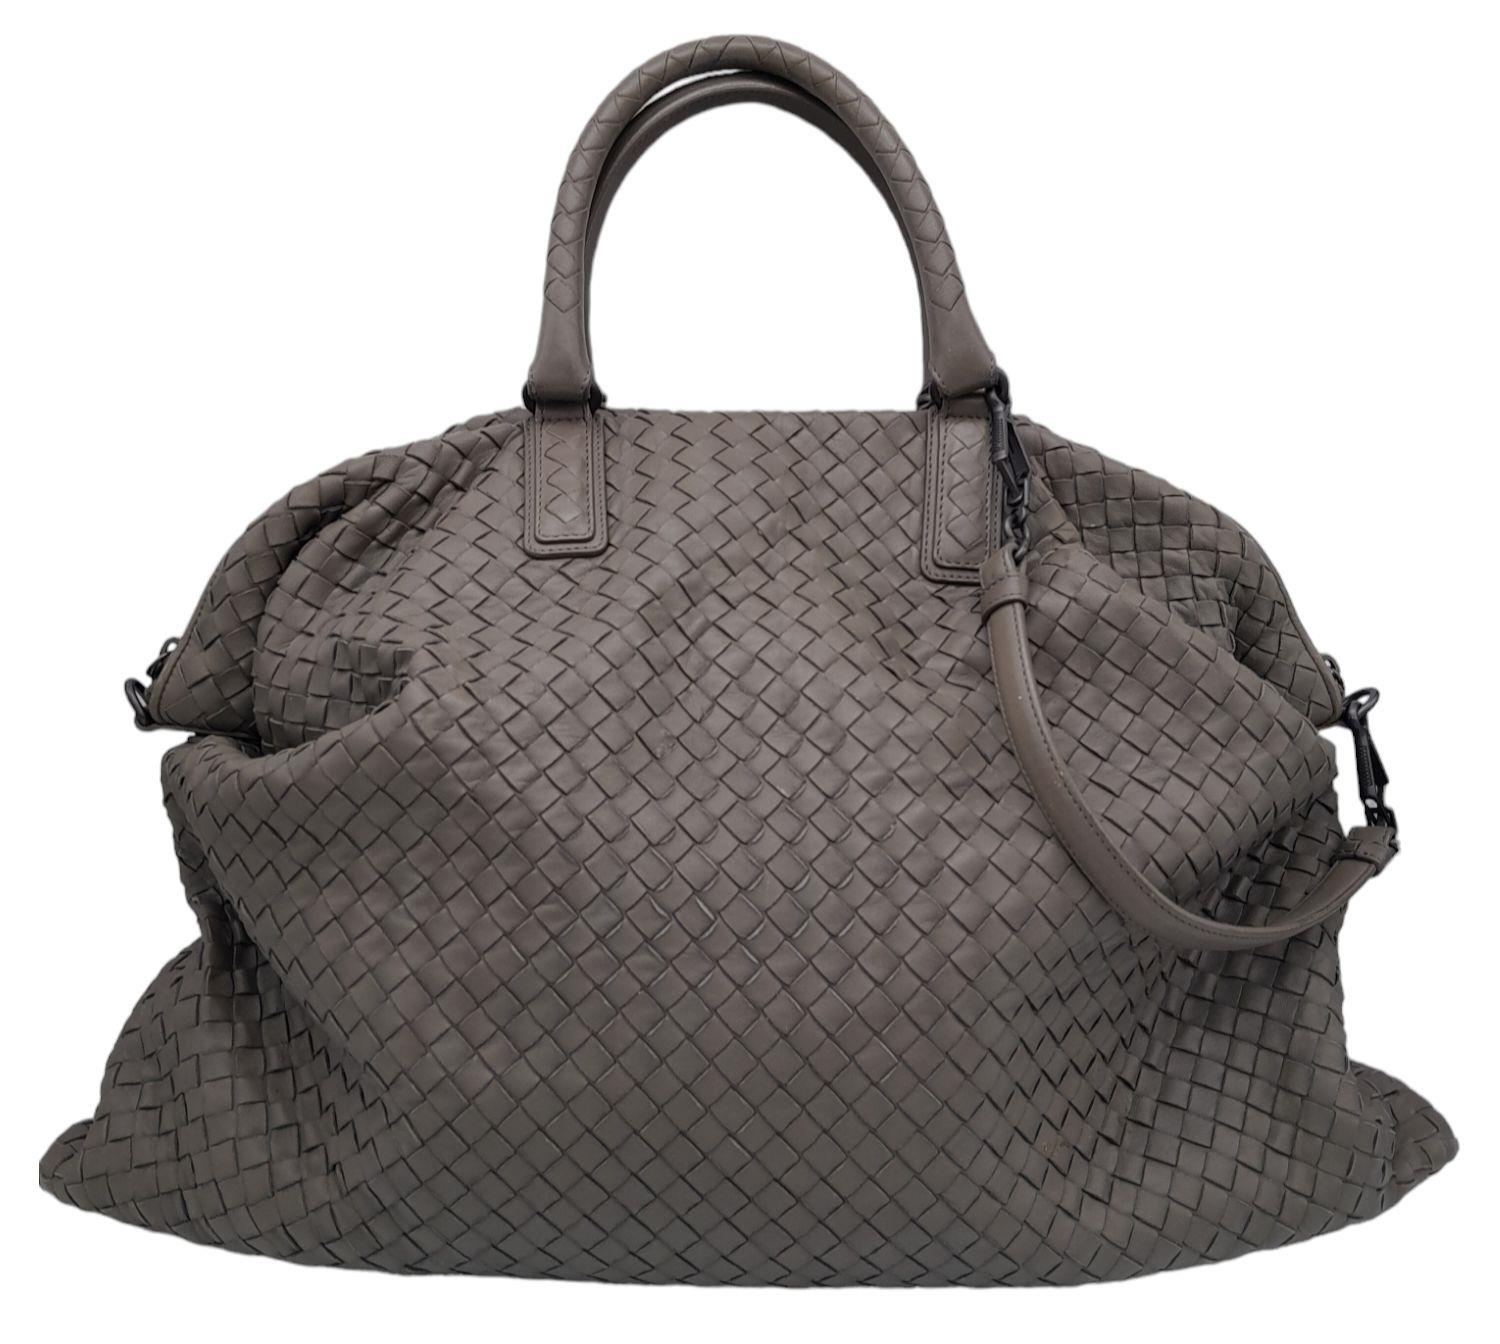 A Bottega Veneta Khaki Tote Bag. Intrecciato leather with chrome-toned hardware, two rolled